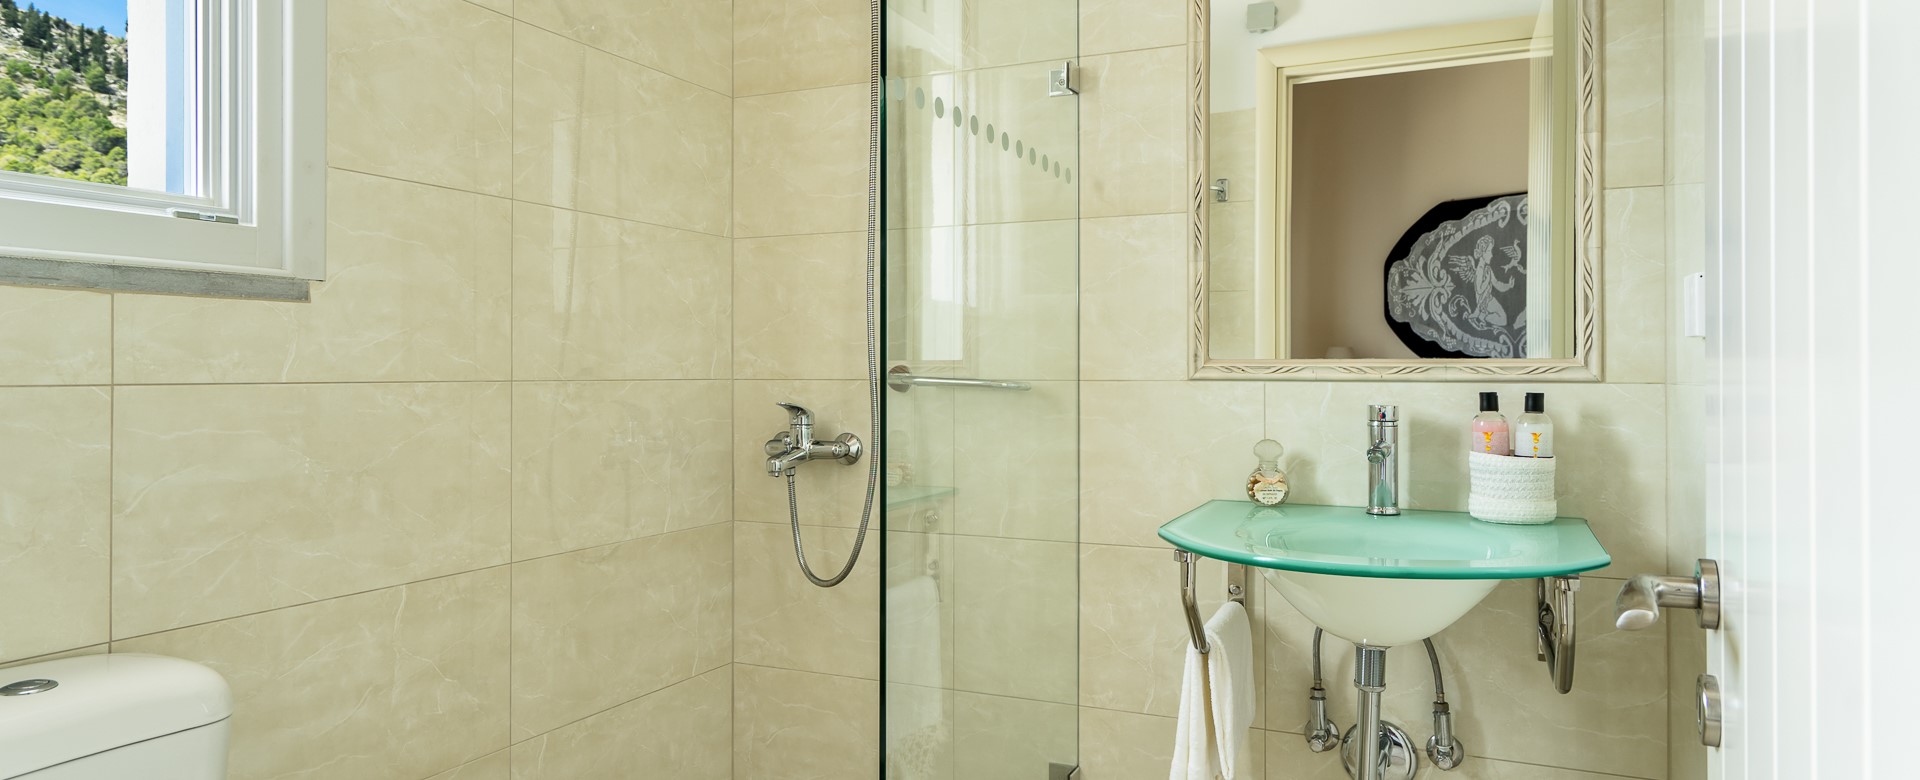 Bathroom with shower and basin at Villa Plori, Assos, Kefalonia